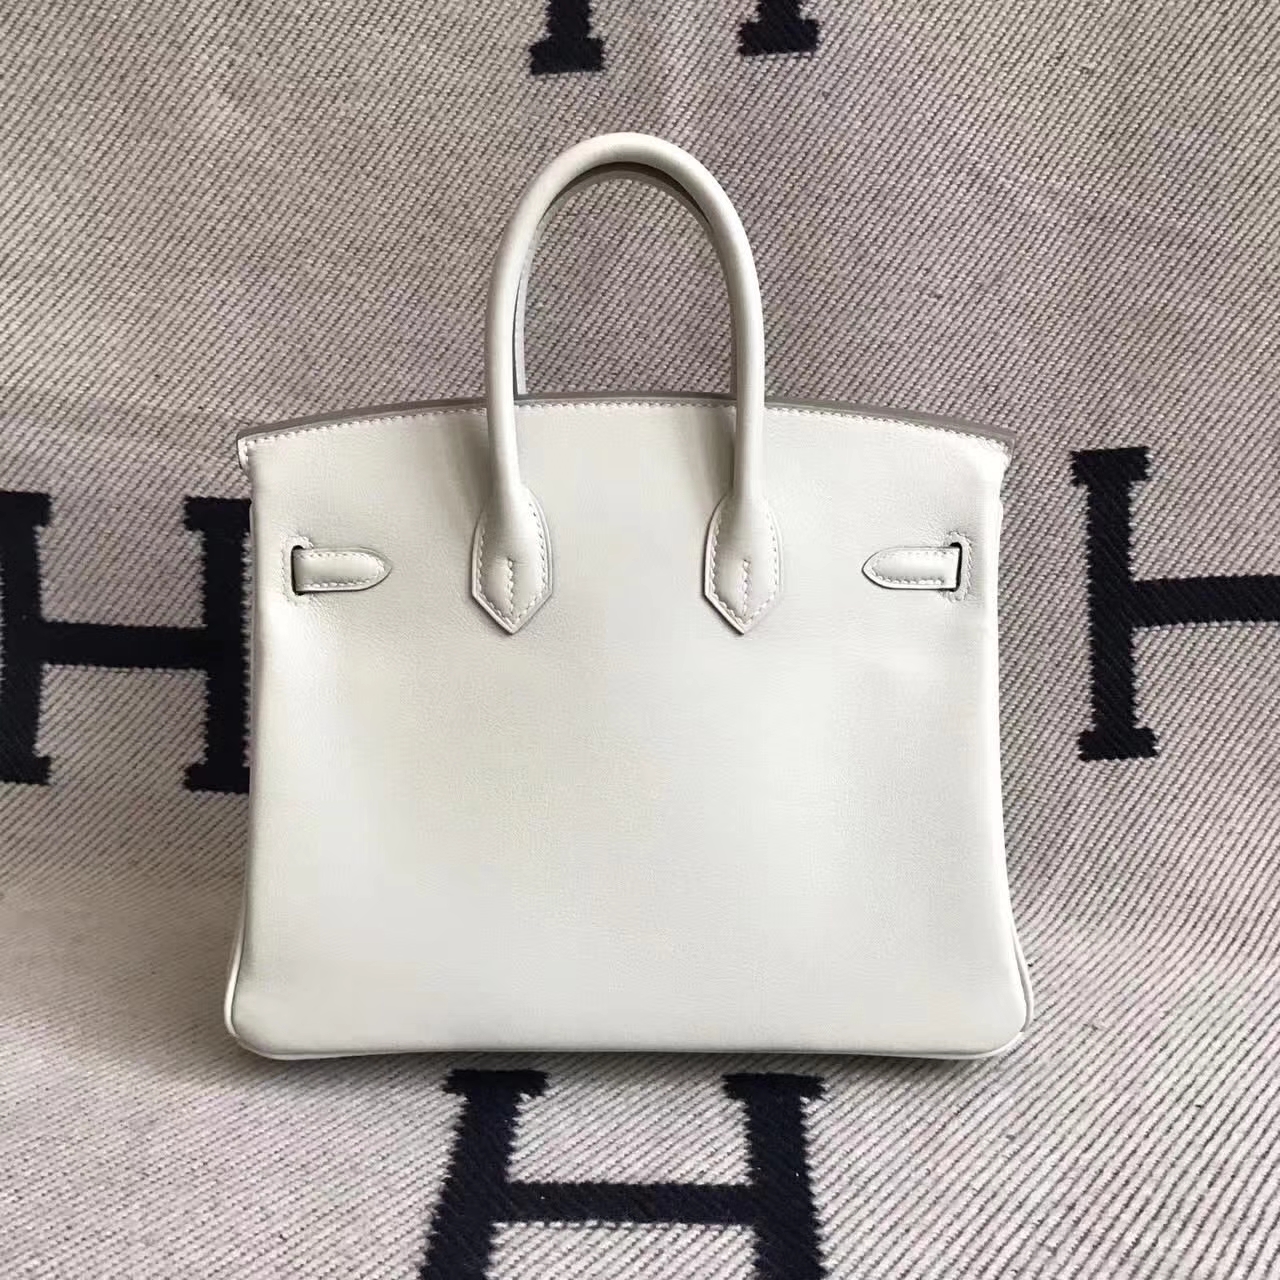 Discount Hermes Birkin Bag 30cm CK10 Carie White Swift Leather